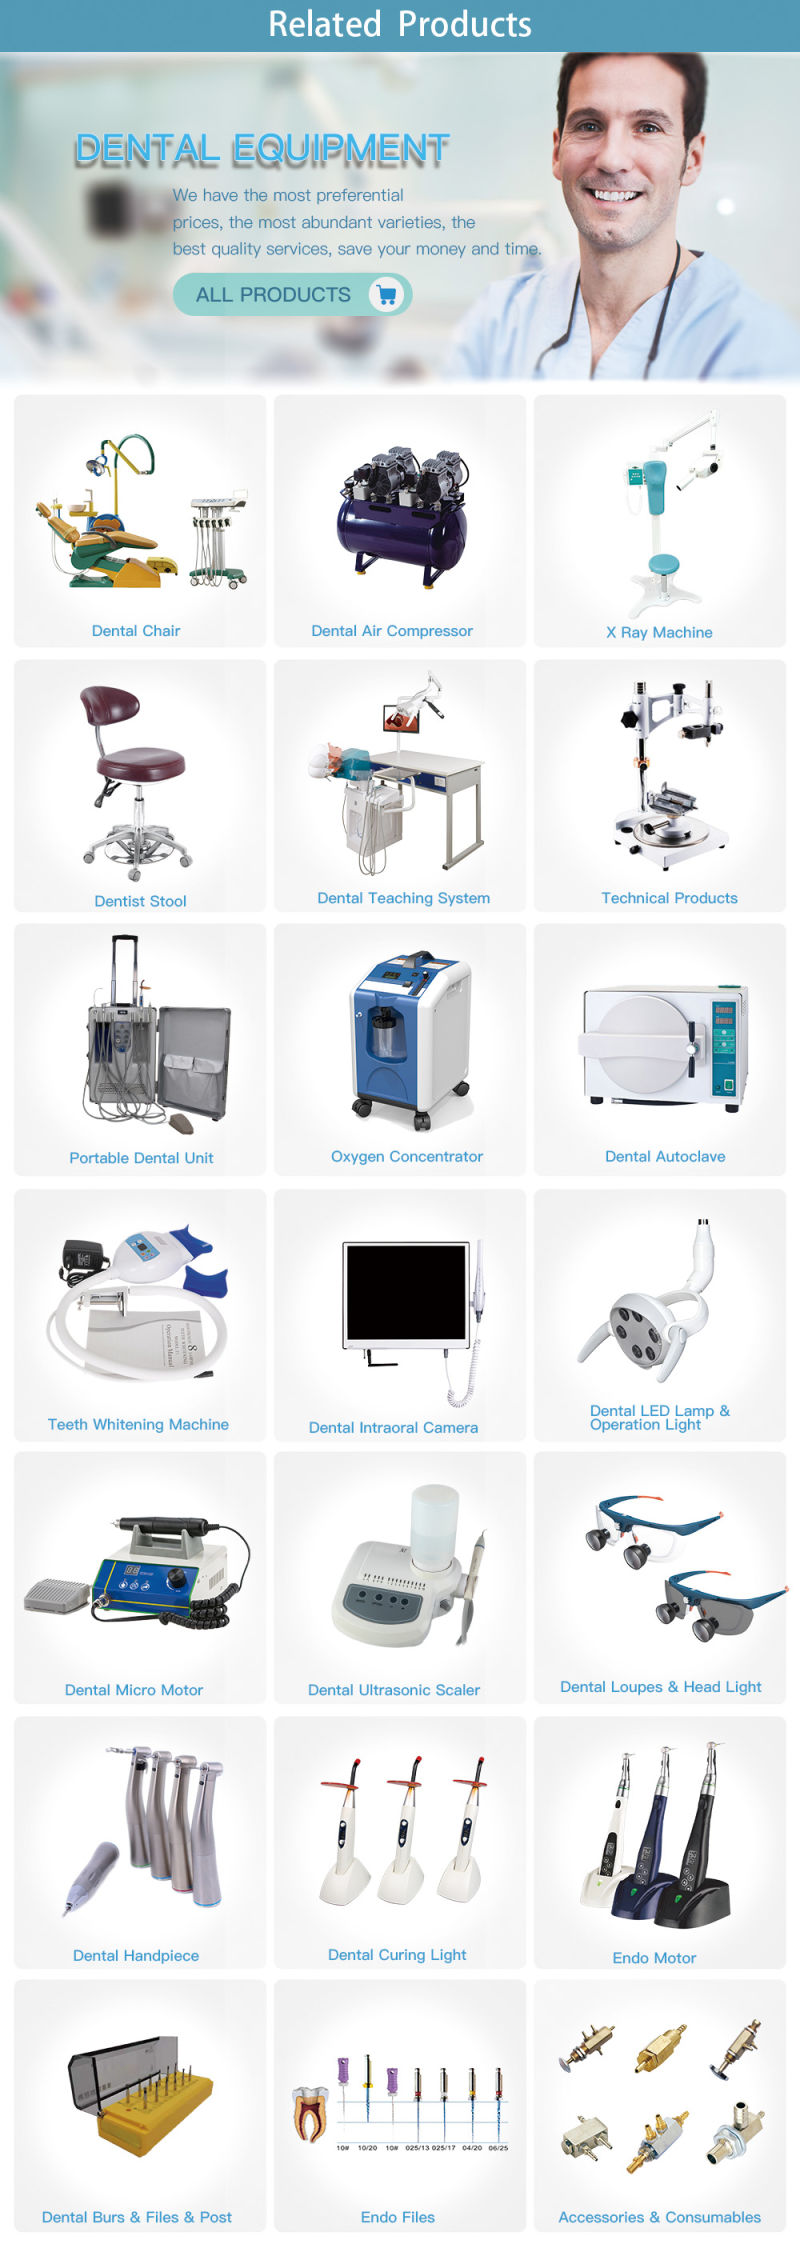 China Supply Good Price for Dental X-ray Machine Portable Dental X Ray Unit Equipment